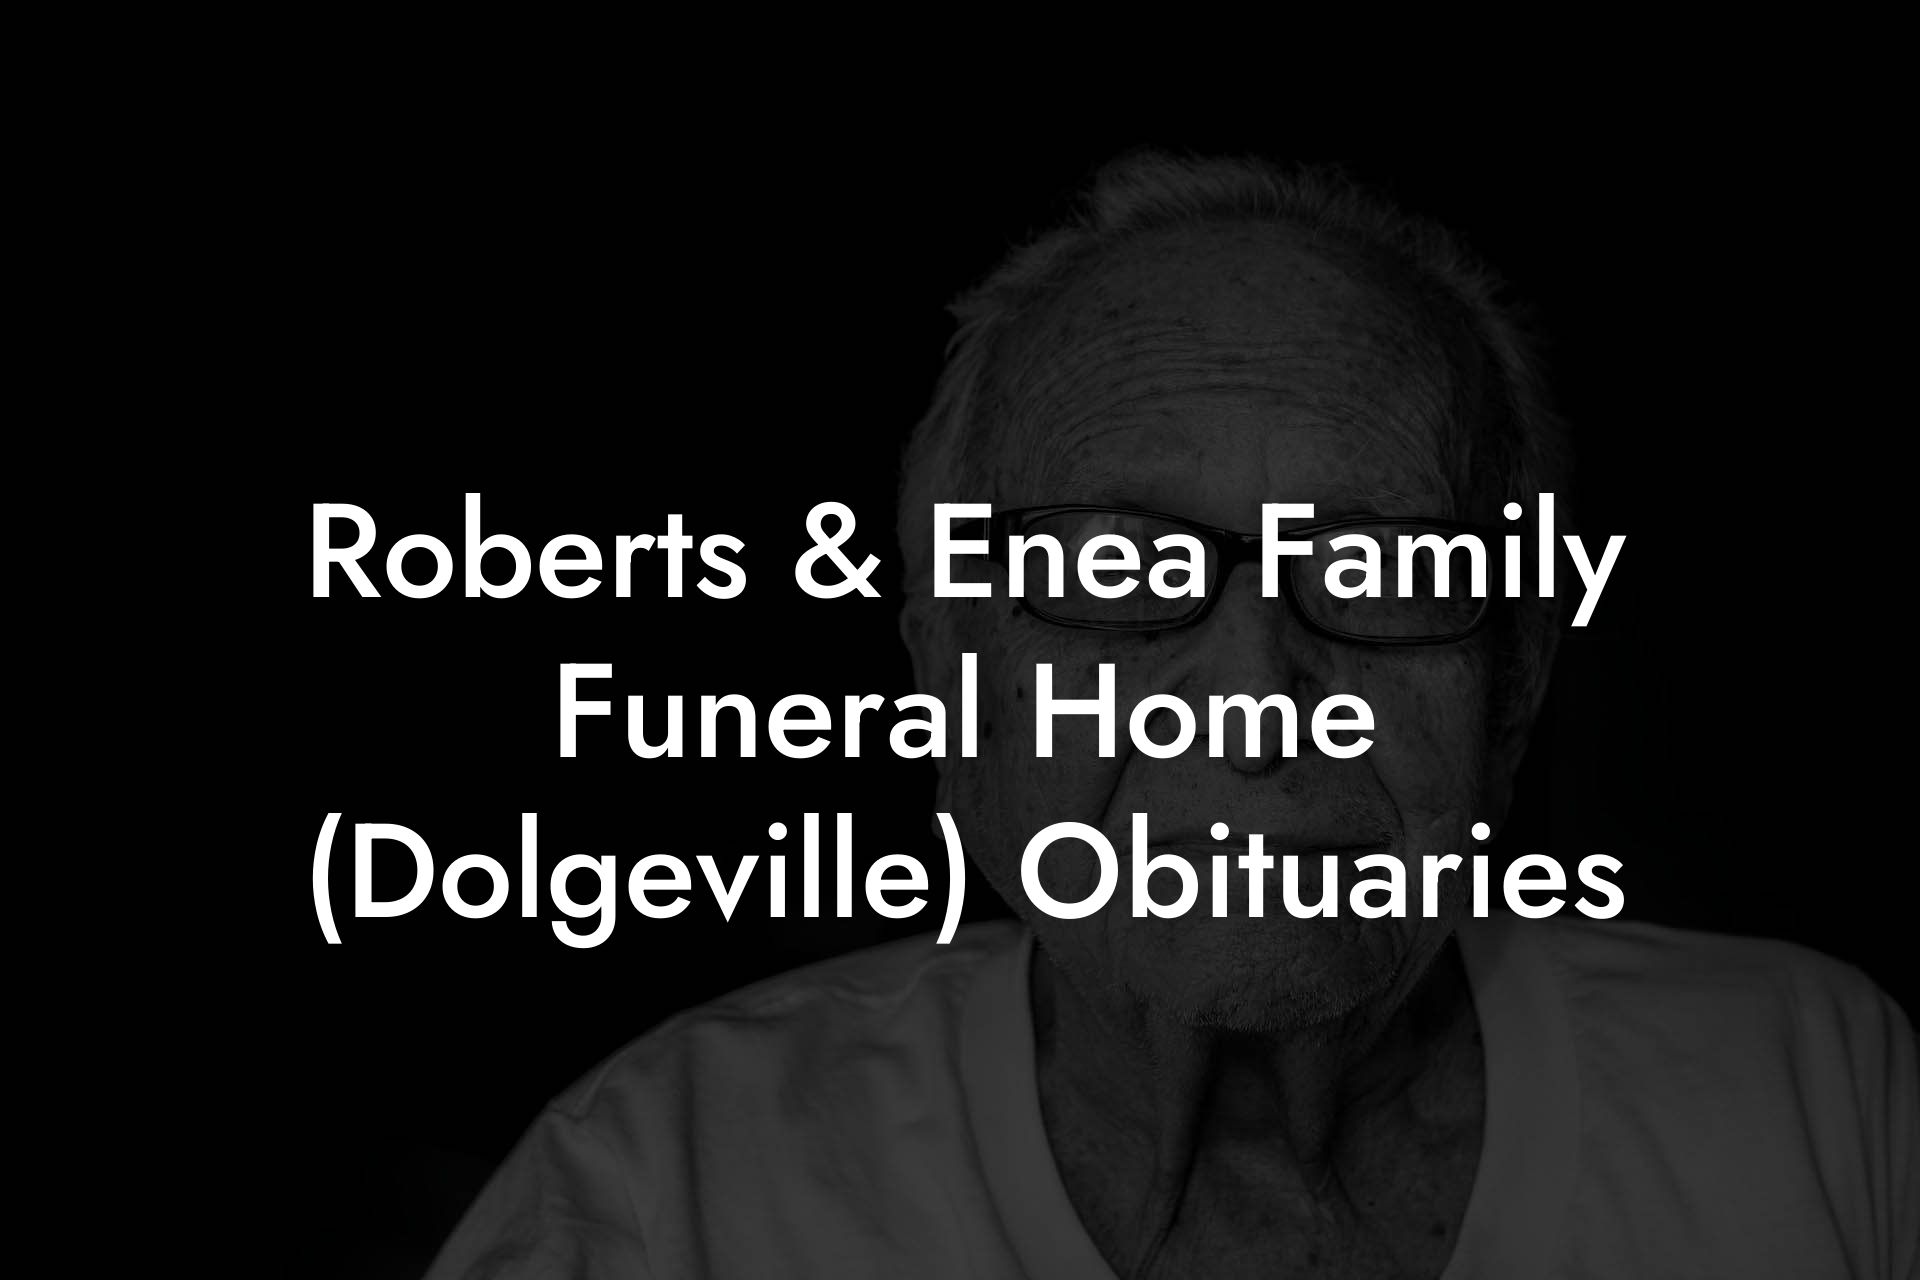 Roberts & Enea Family Funeral Home (Dolgeville) Obituaries